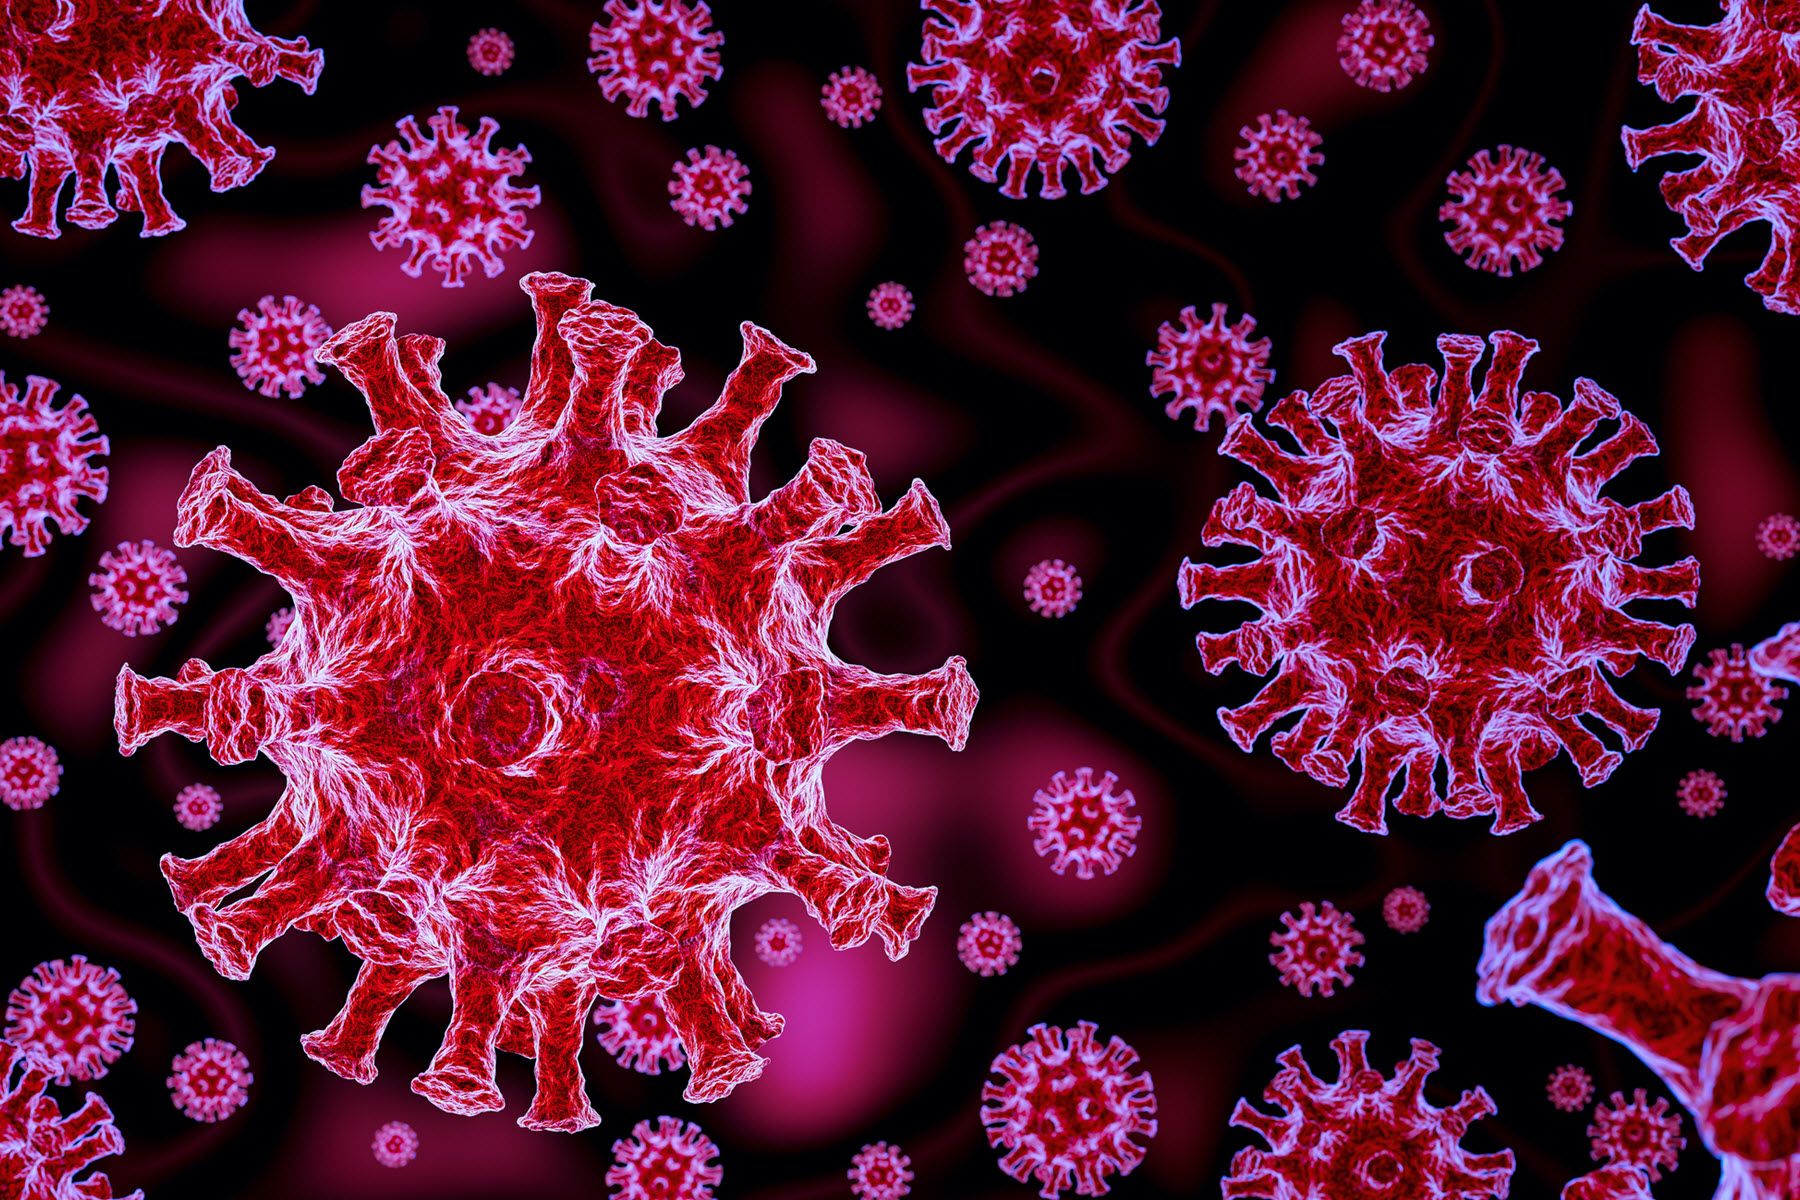 Coronavirus Real Images On Body